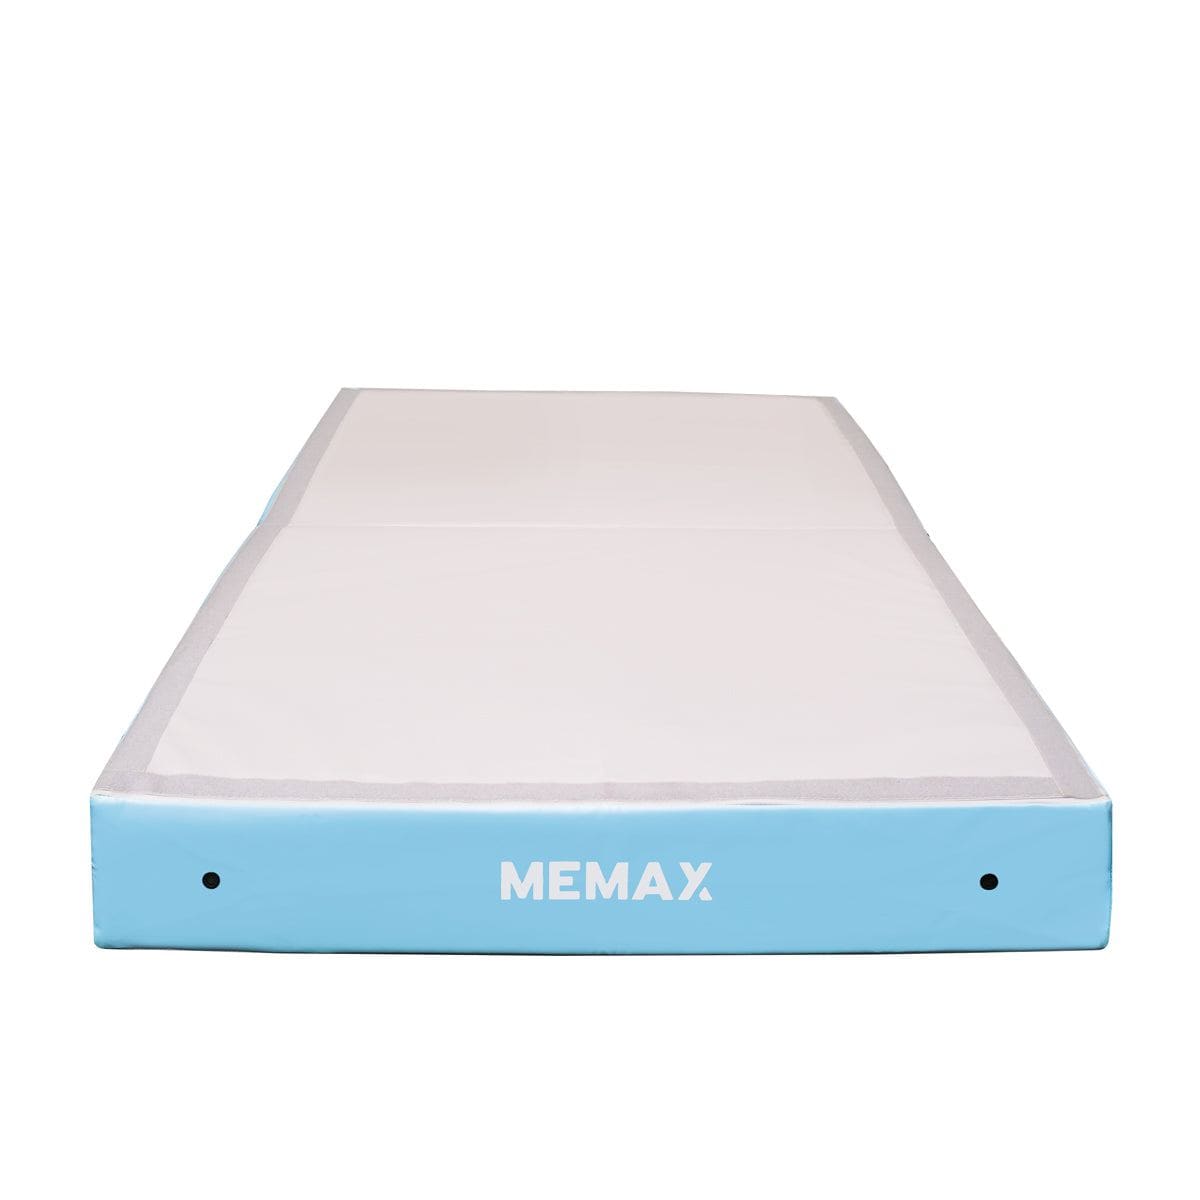 MEMAX 20cm Thick Foldable Crash Mat Safety Landing Mat - Soft